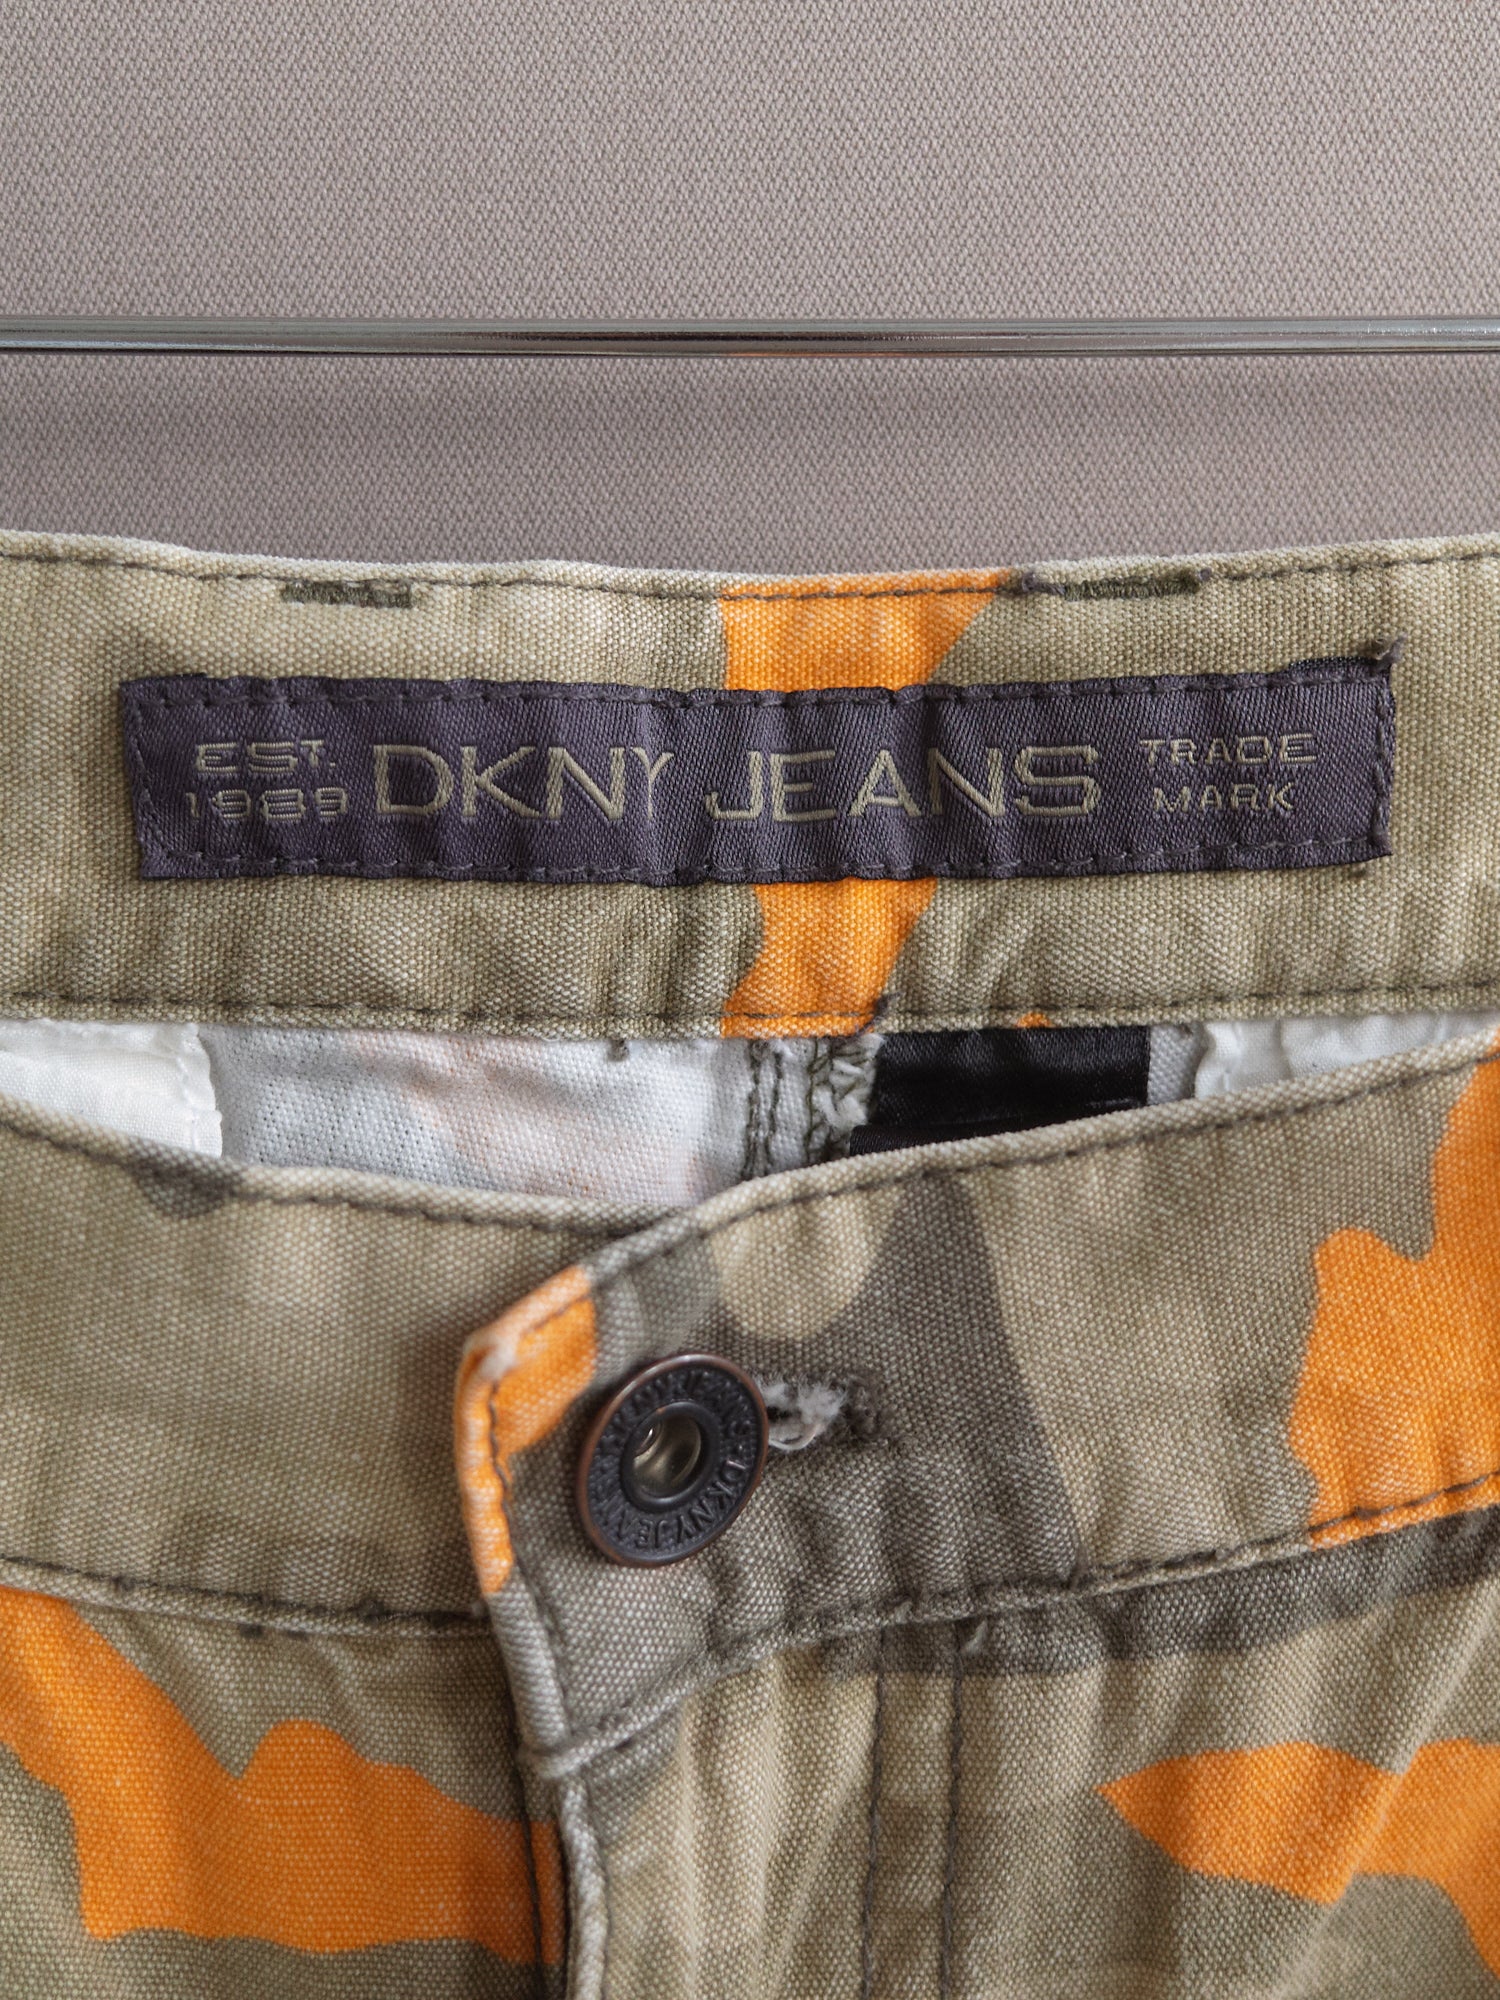 DKNY 1990s beige khaki orange camo multi pocket cargo trousers - womens M